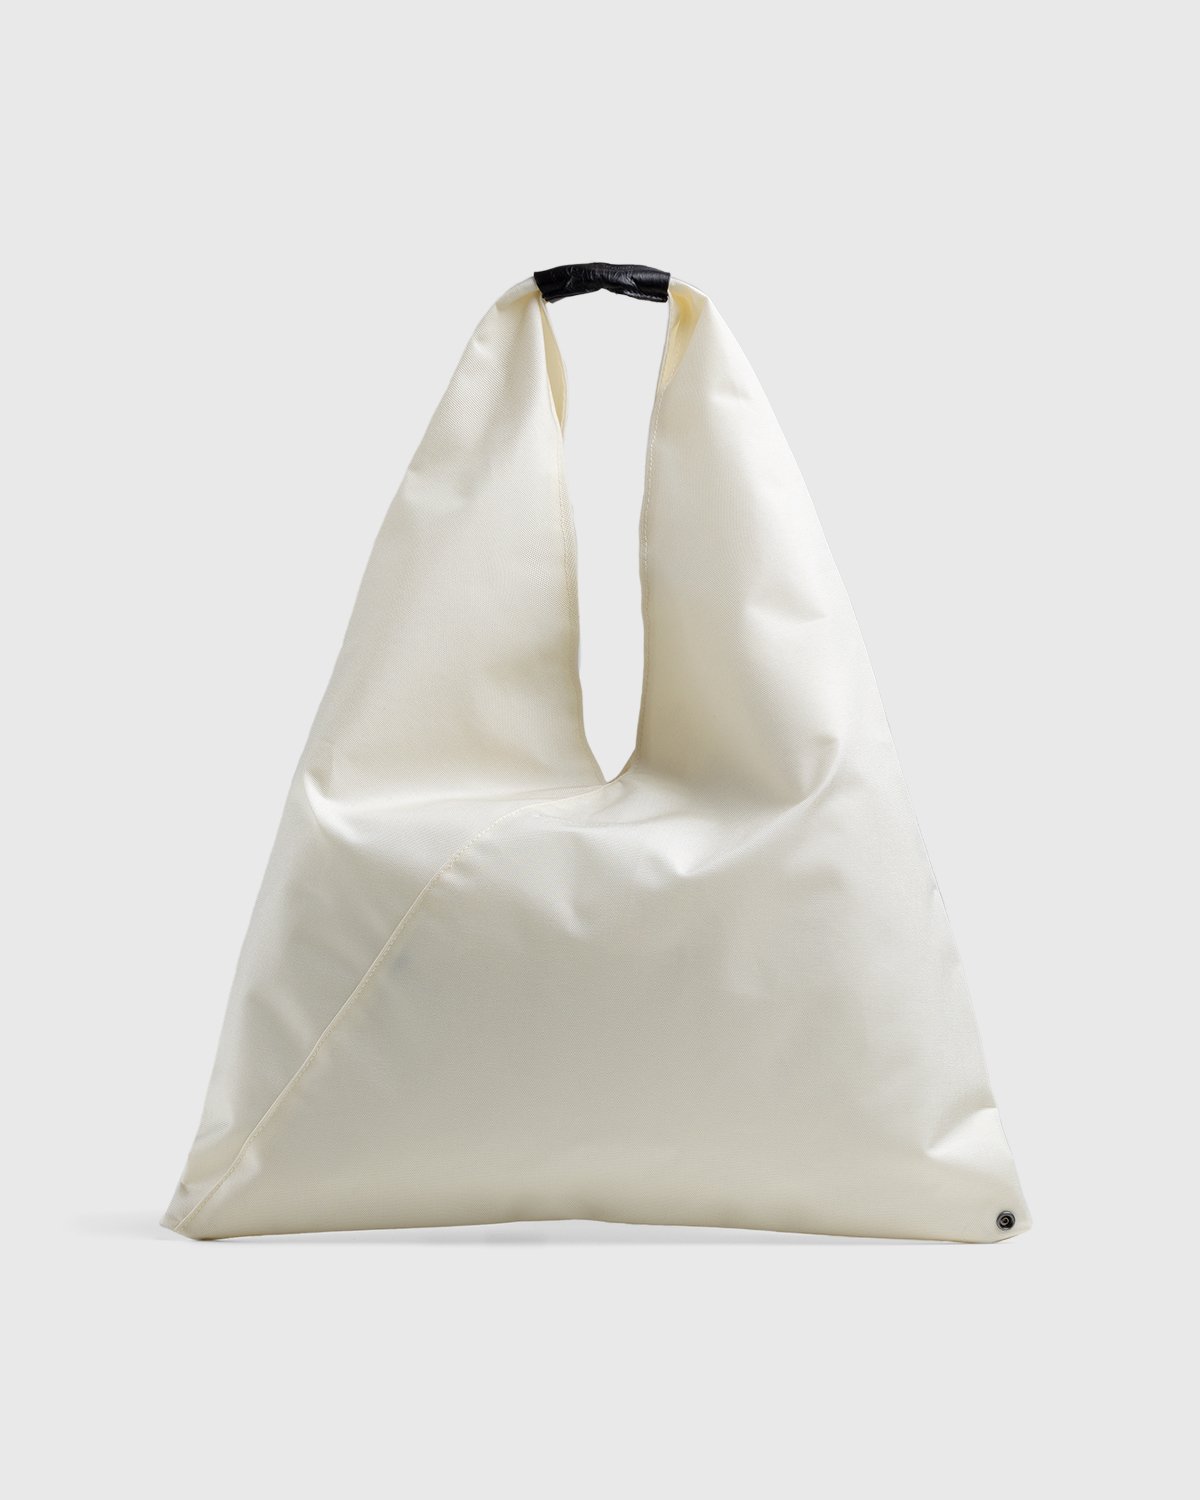 MM6 Maison Margiela x Eastpak - Borsa Shopping Bag White - Accessories - White - Image 2